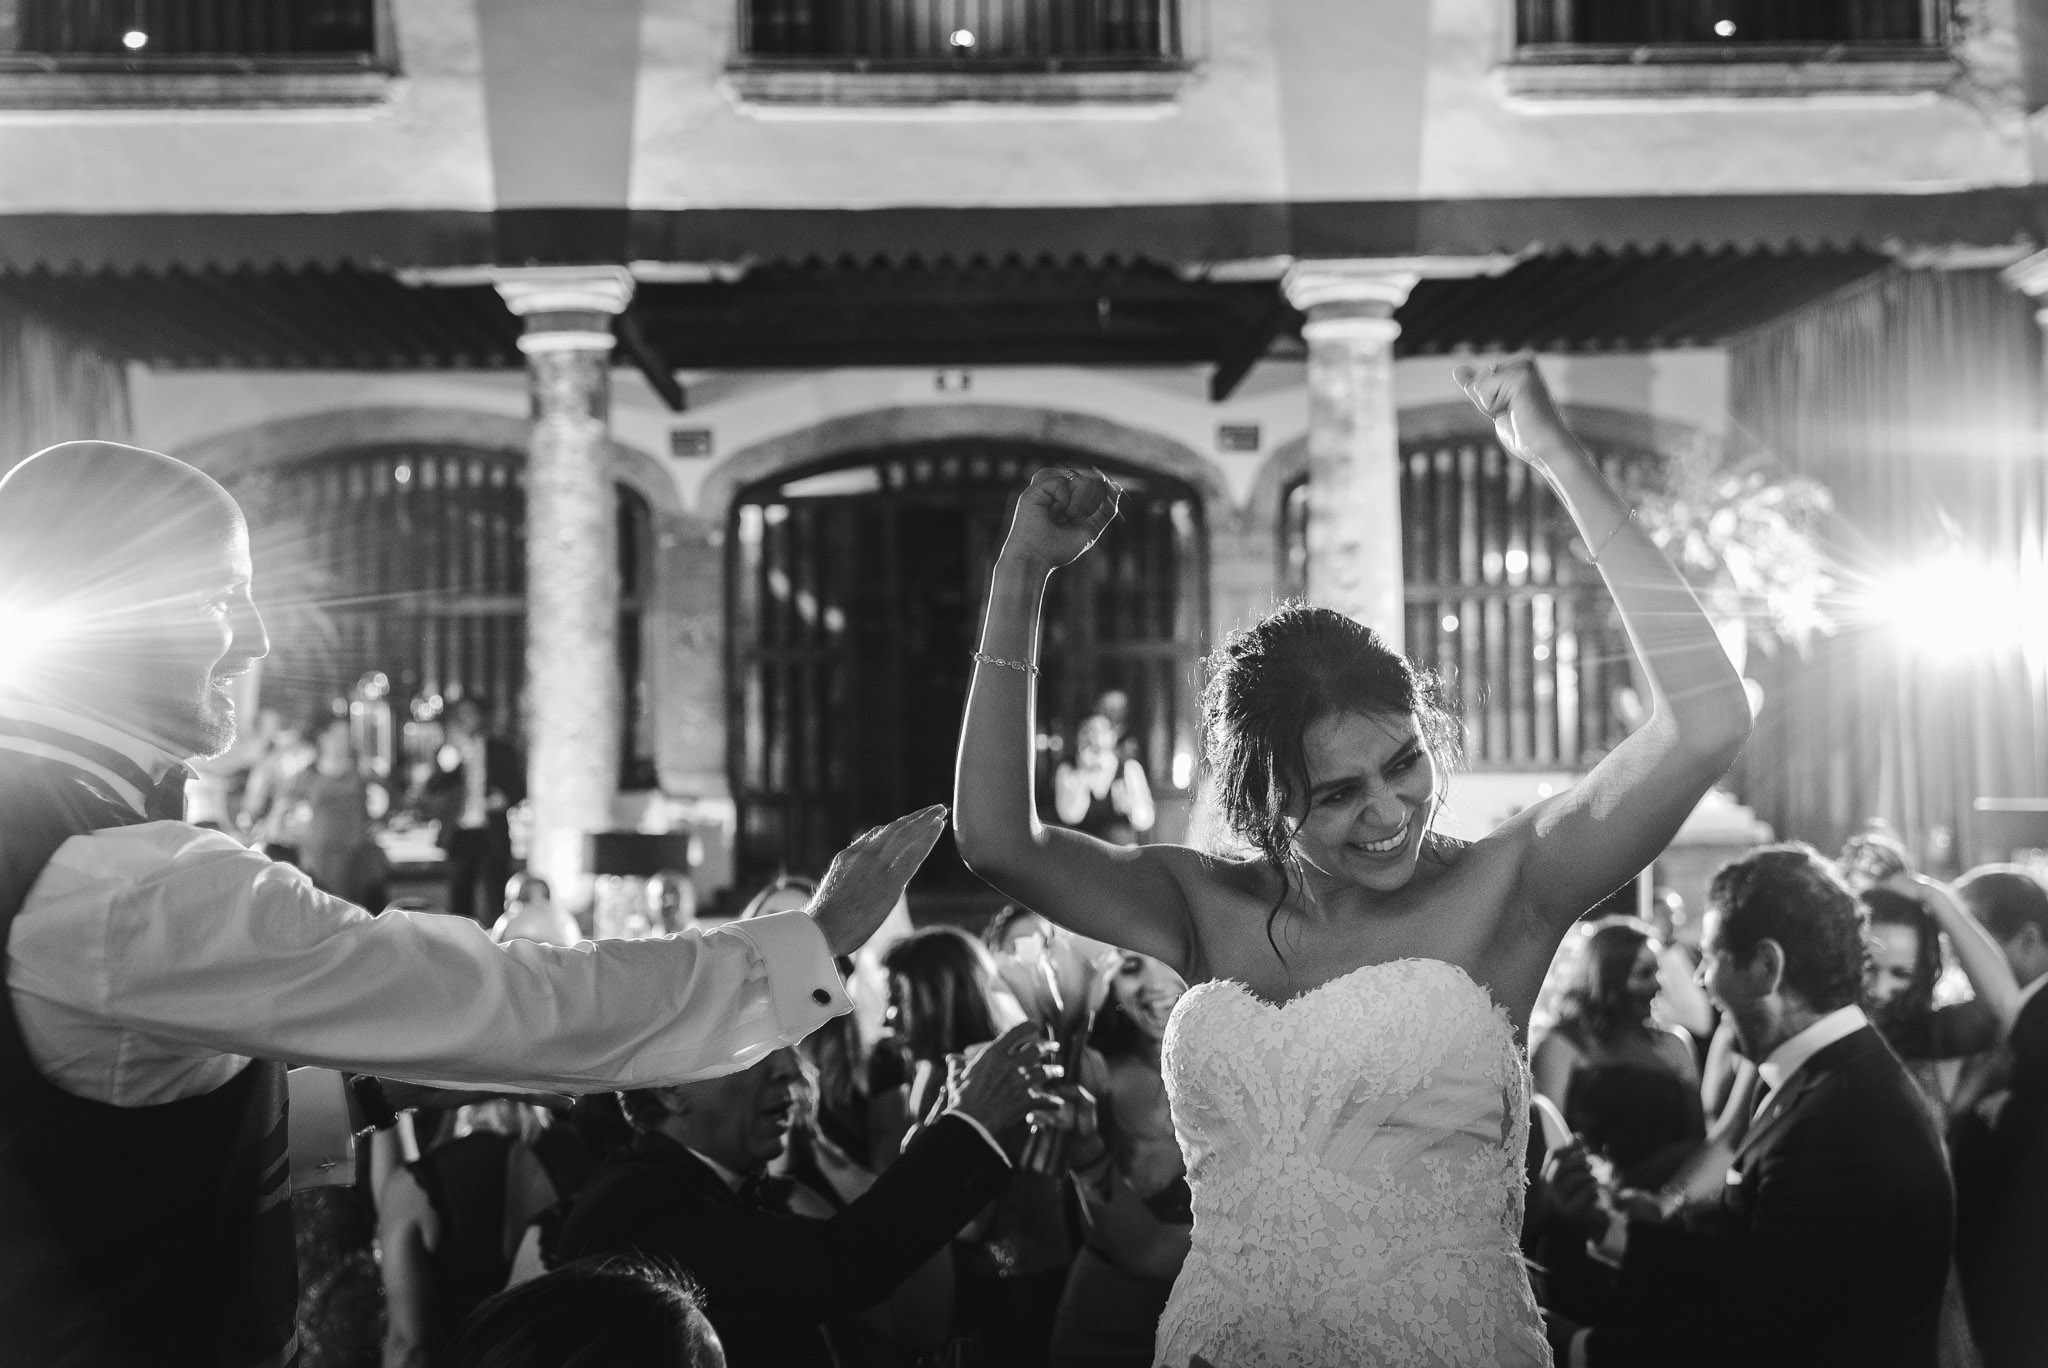 ©www.mauriziosolisbroca.com-20161002maurizio-solis-broca-mexico-canada-wedding-photographer20161002DSC00424-2-Edit.jpg